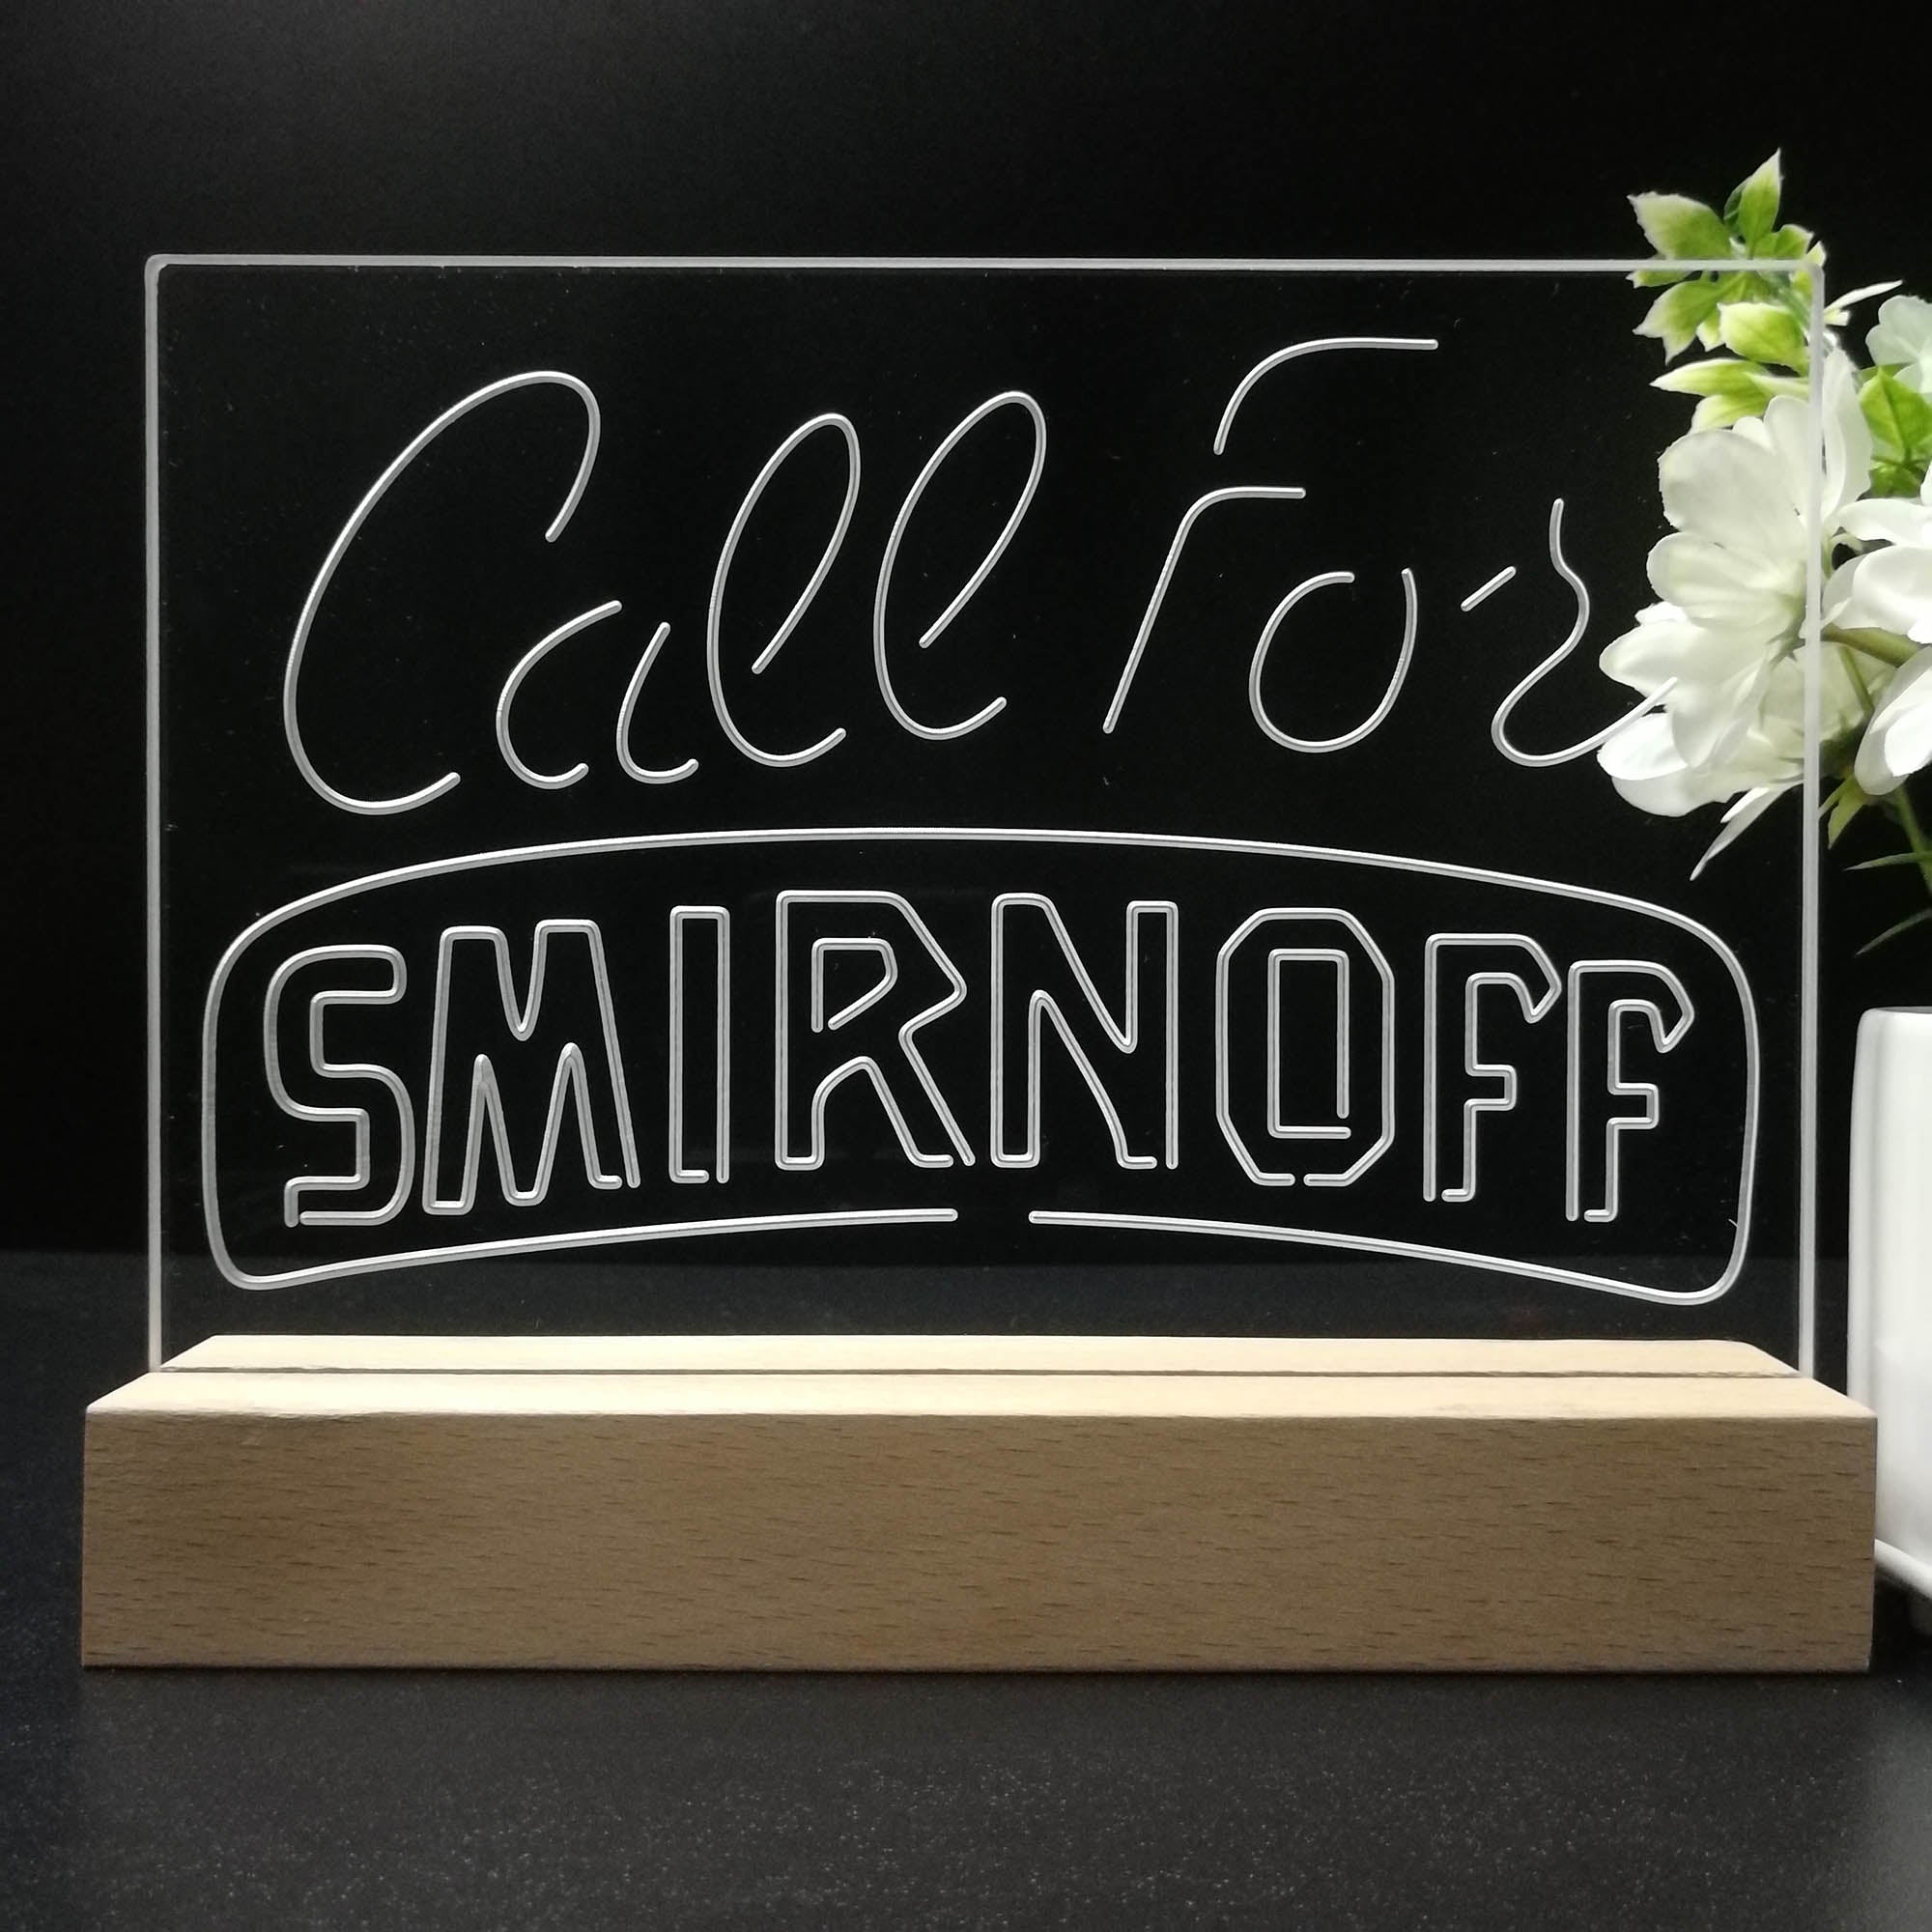 Call For Smirnoff Neon Sign Pub Bar Decor Lamp